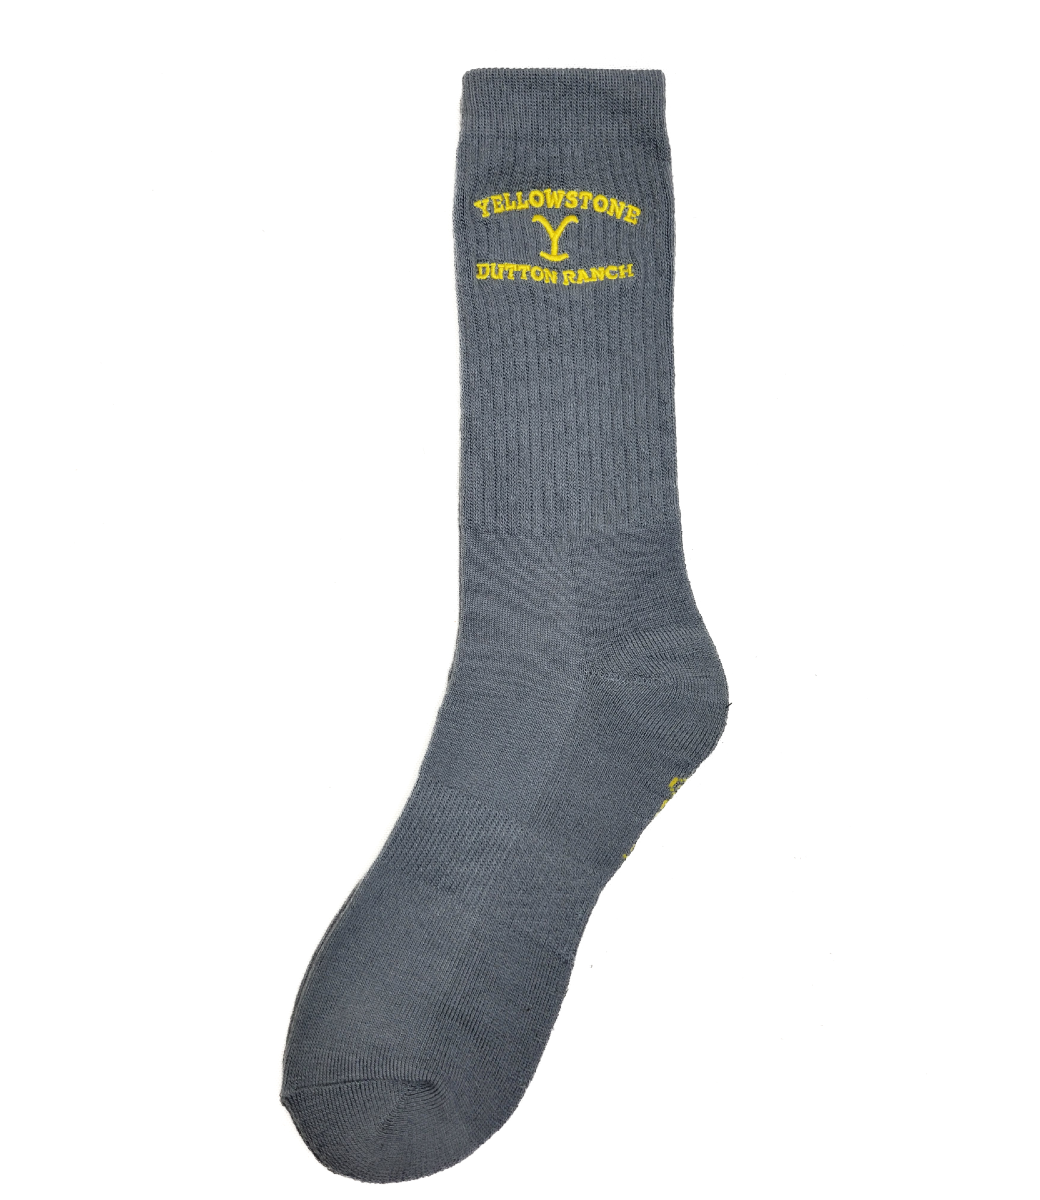 Yellowstone Socks